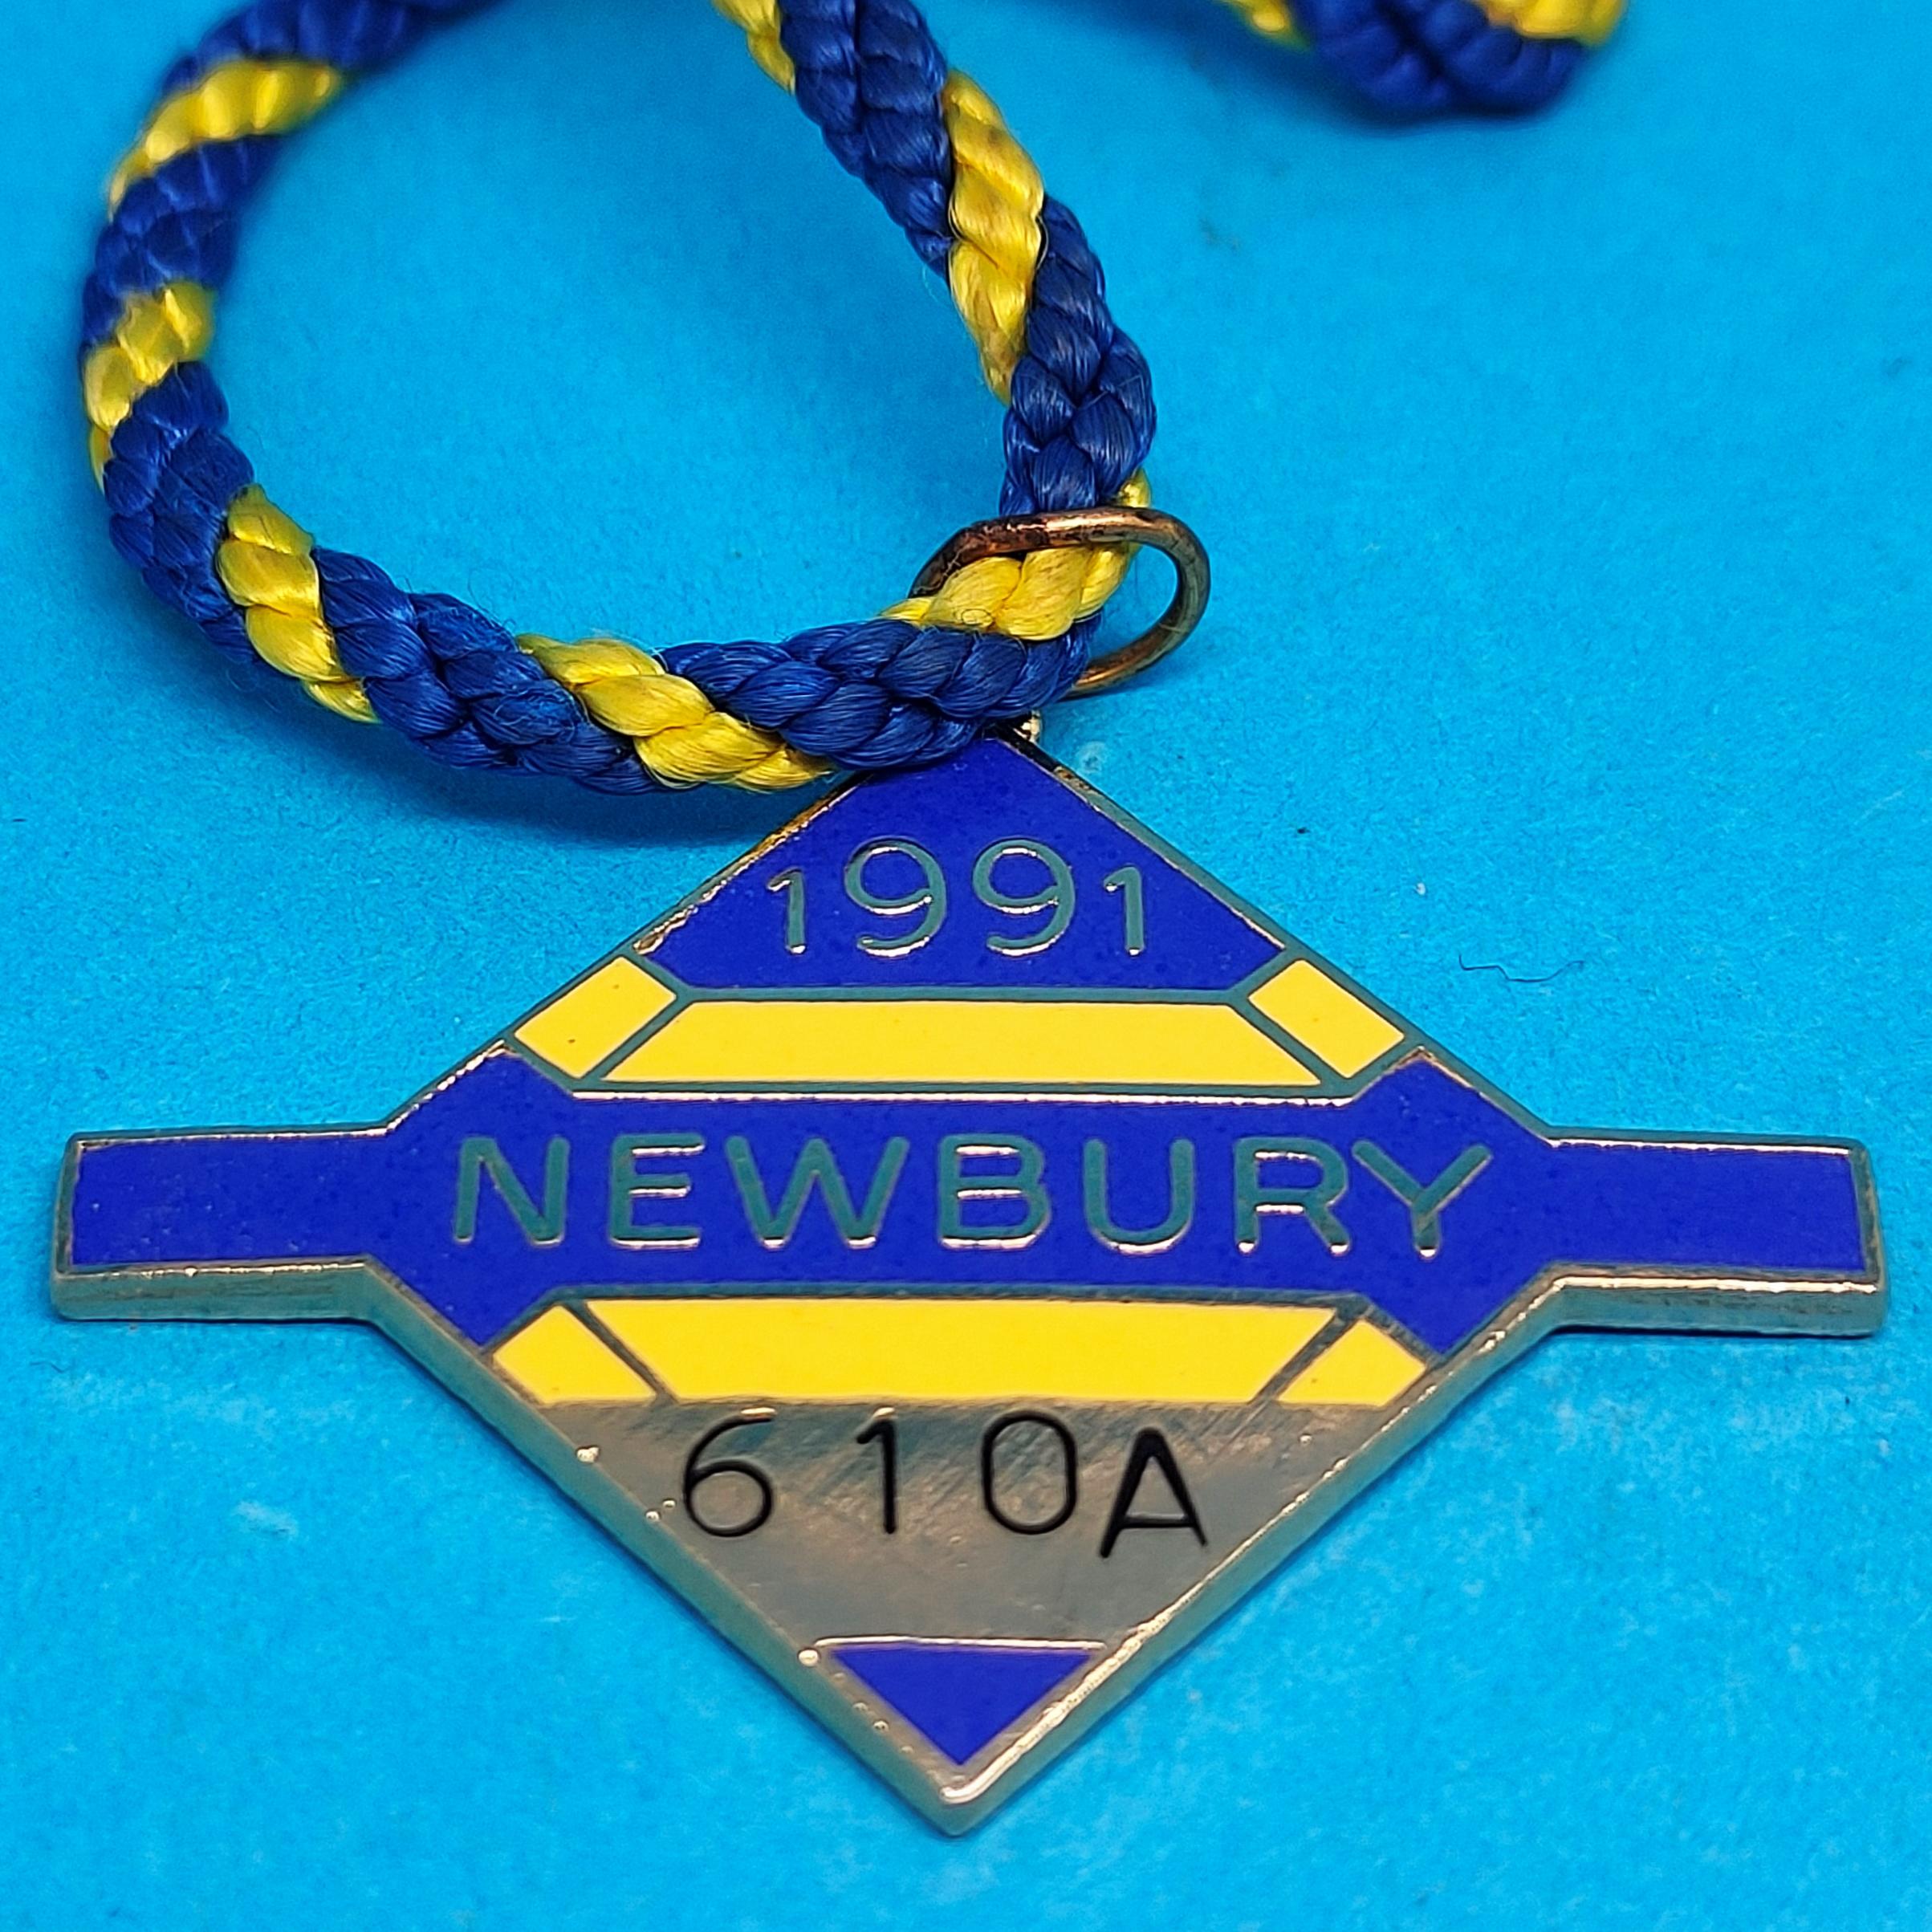 Newbury Ladies 1991